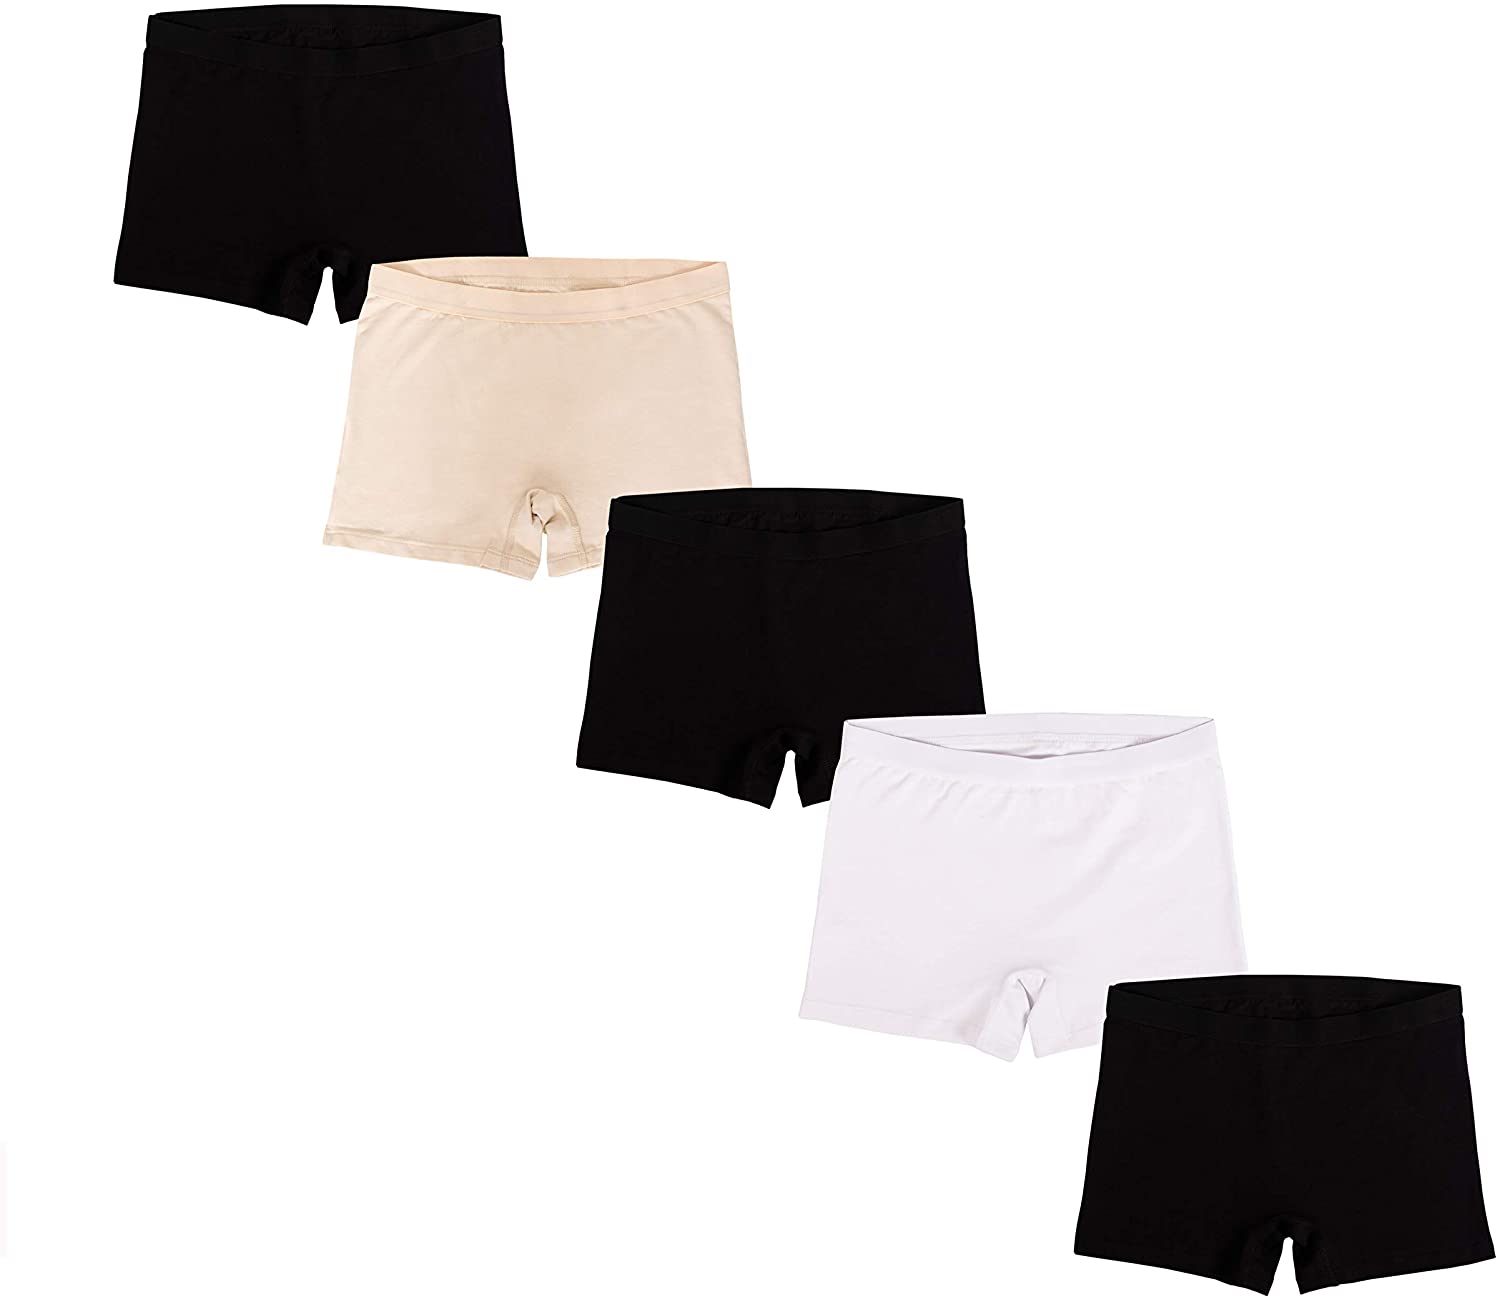 Boyshorts EVARI Women's Comfortable Cotton Underwear Pack of 5